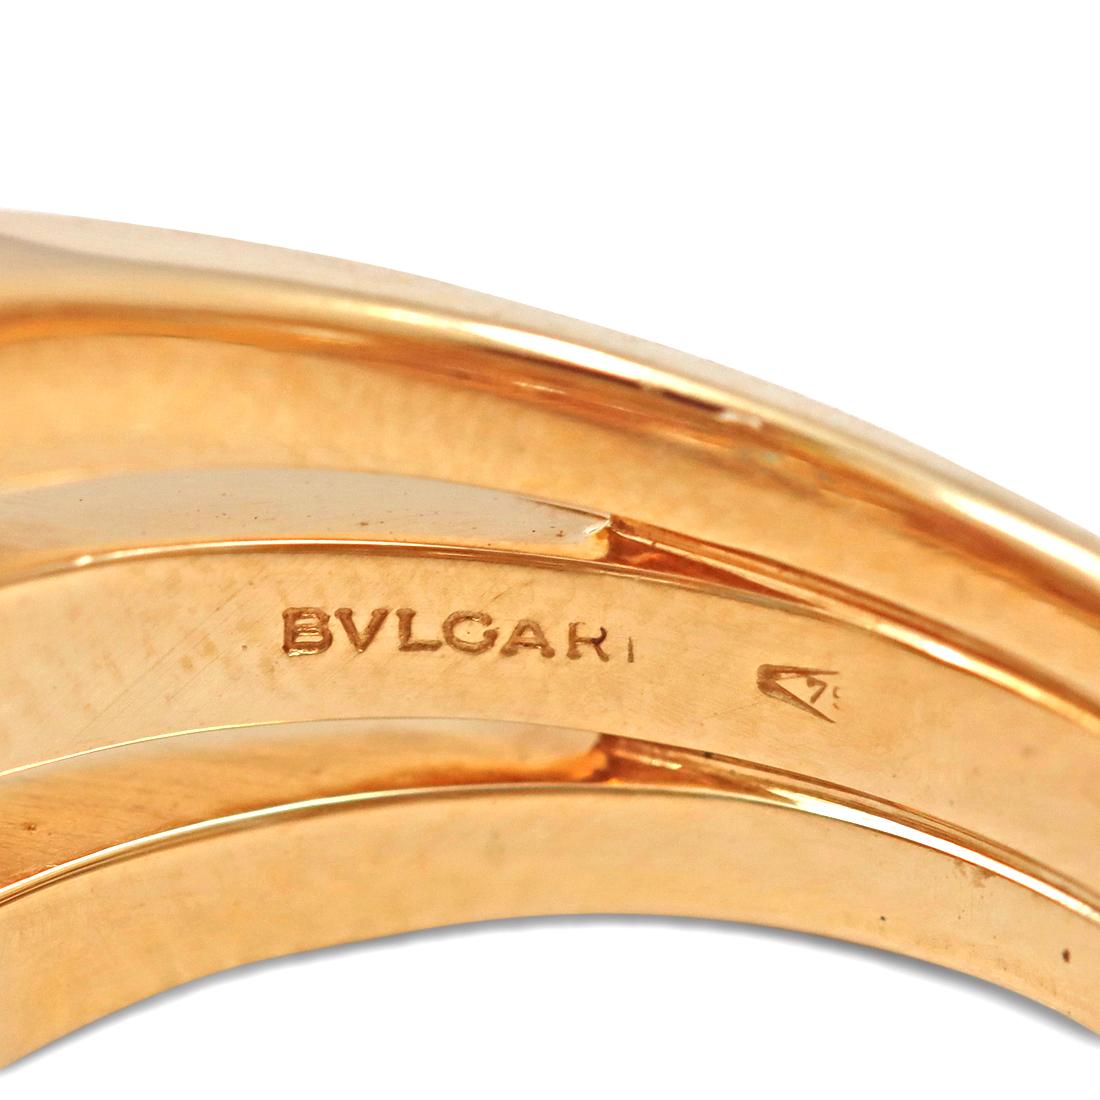 Brilliant Cut Bvlgari Allegra Yellow Gold Multi Stone Diamond Three Band Ring